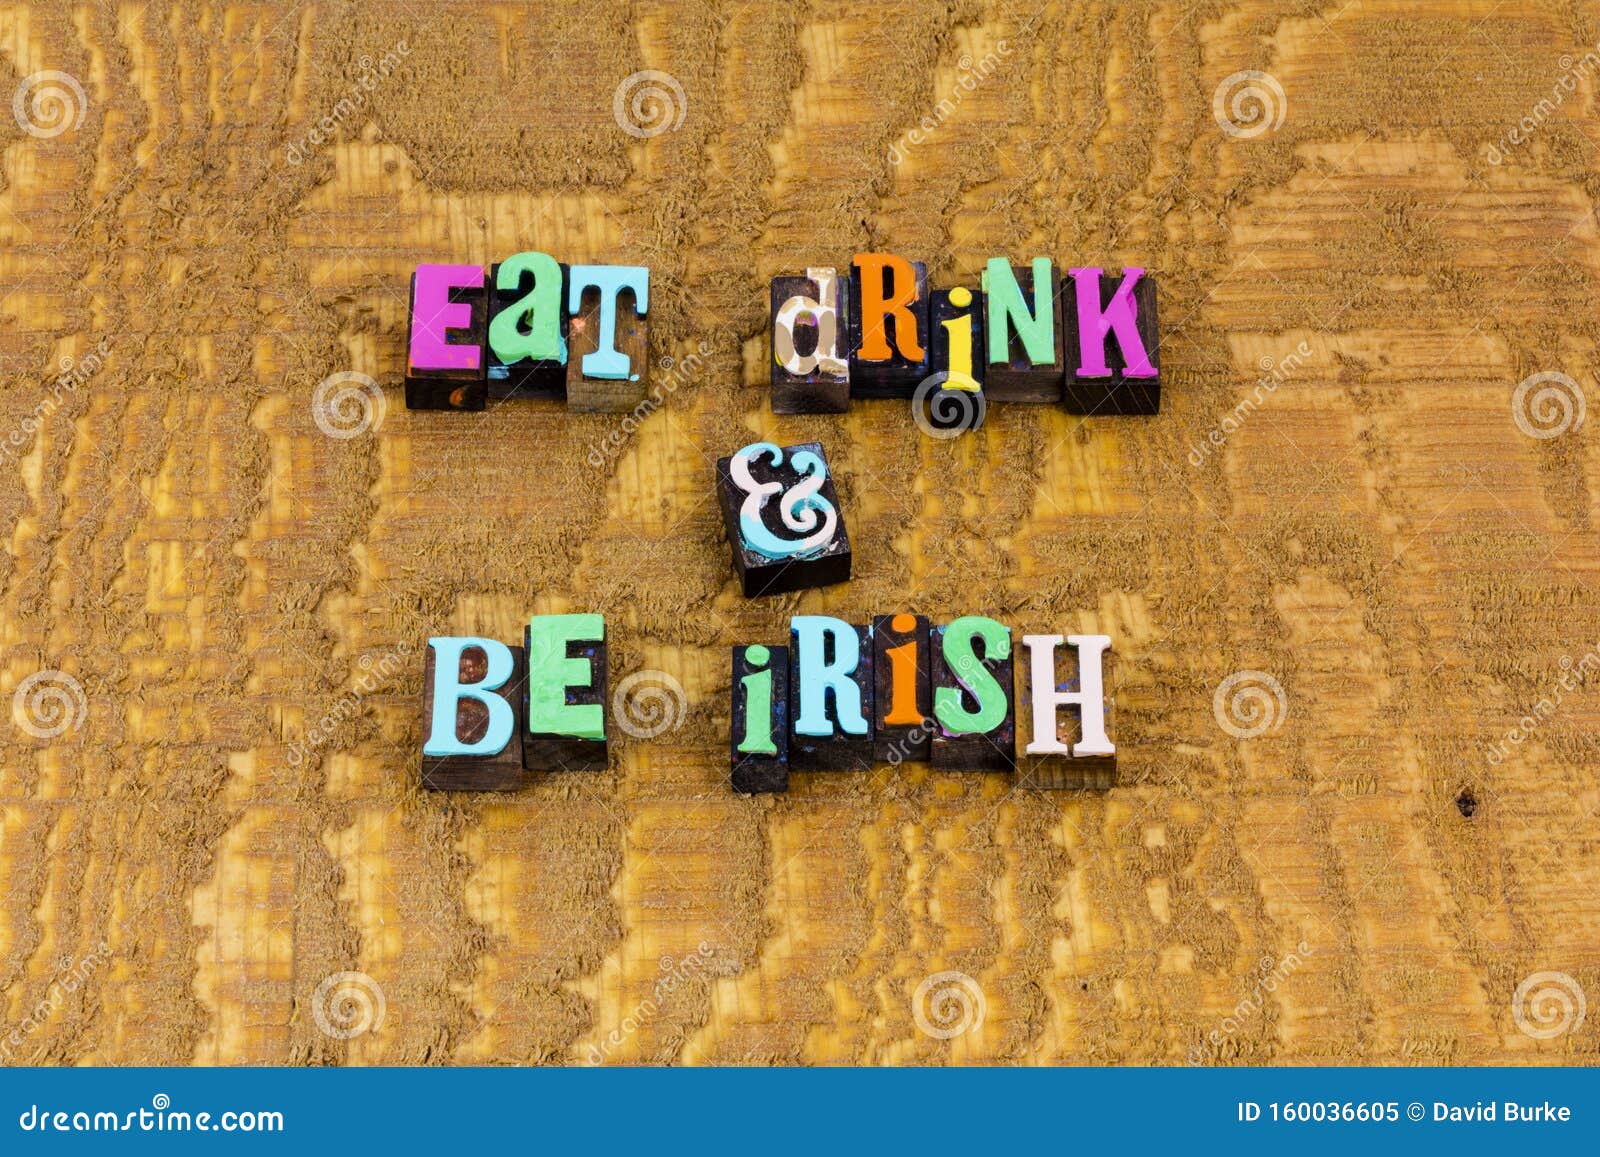 eat drink be irish party booze alcohol fun